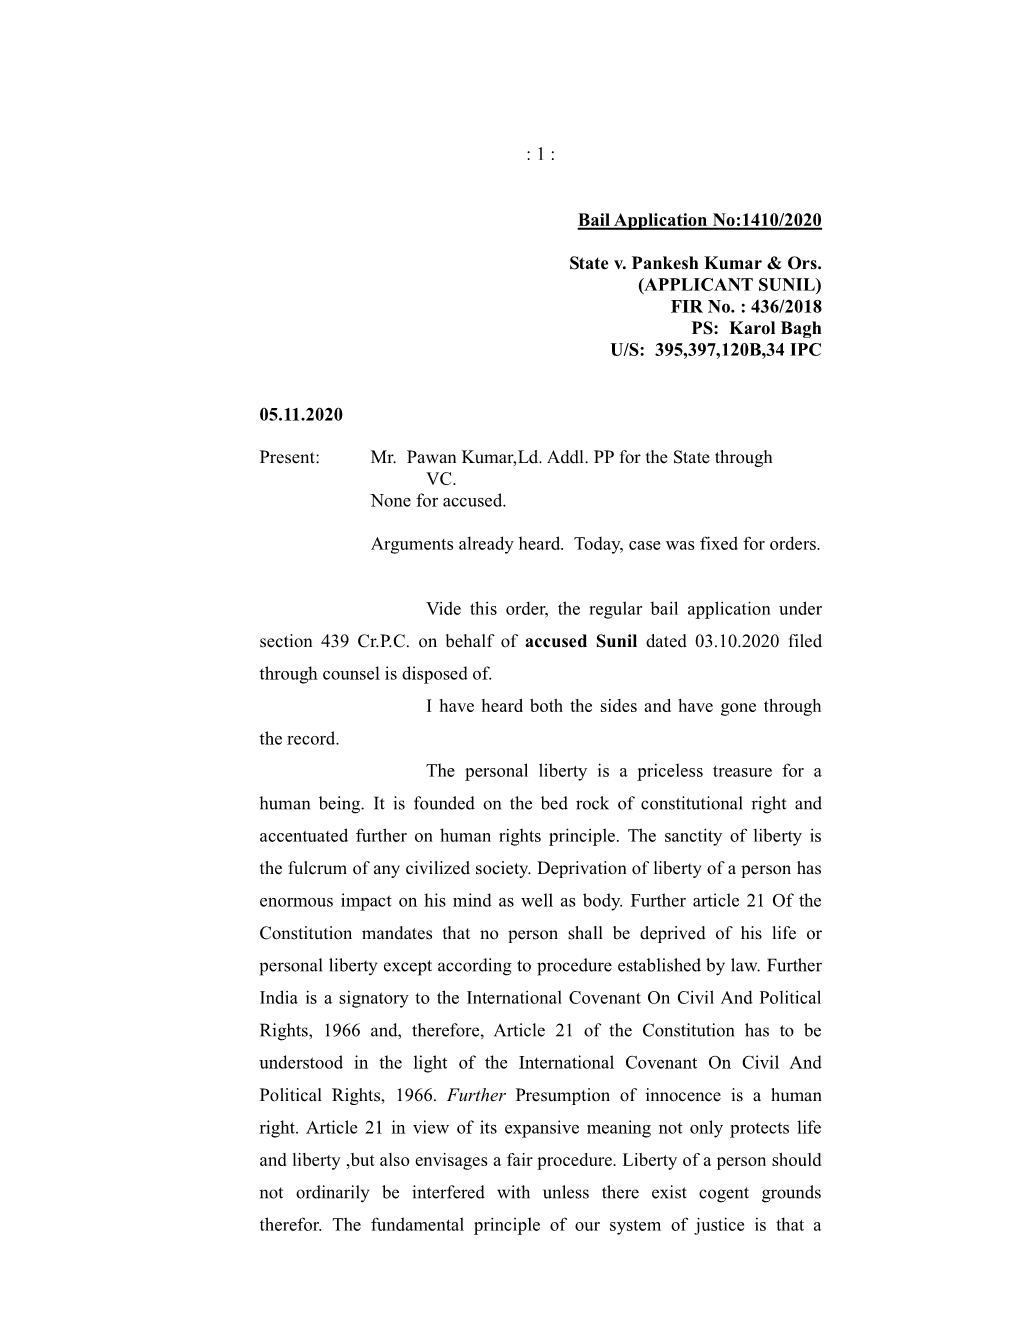 Bail Application No:1410/2020 State V. Pankesh Kumar & Ors